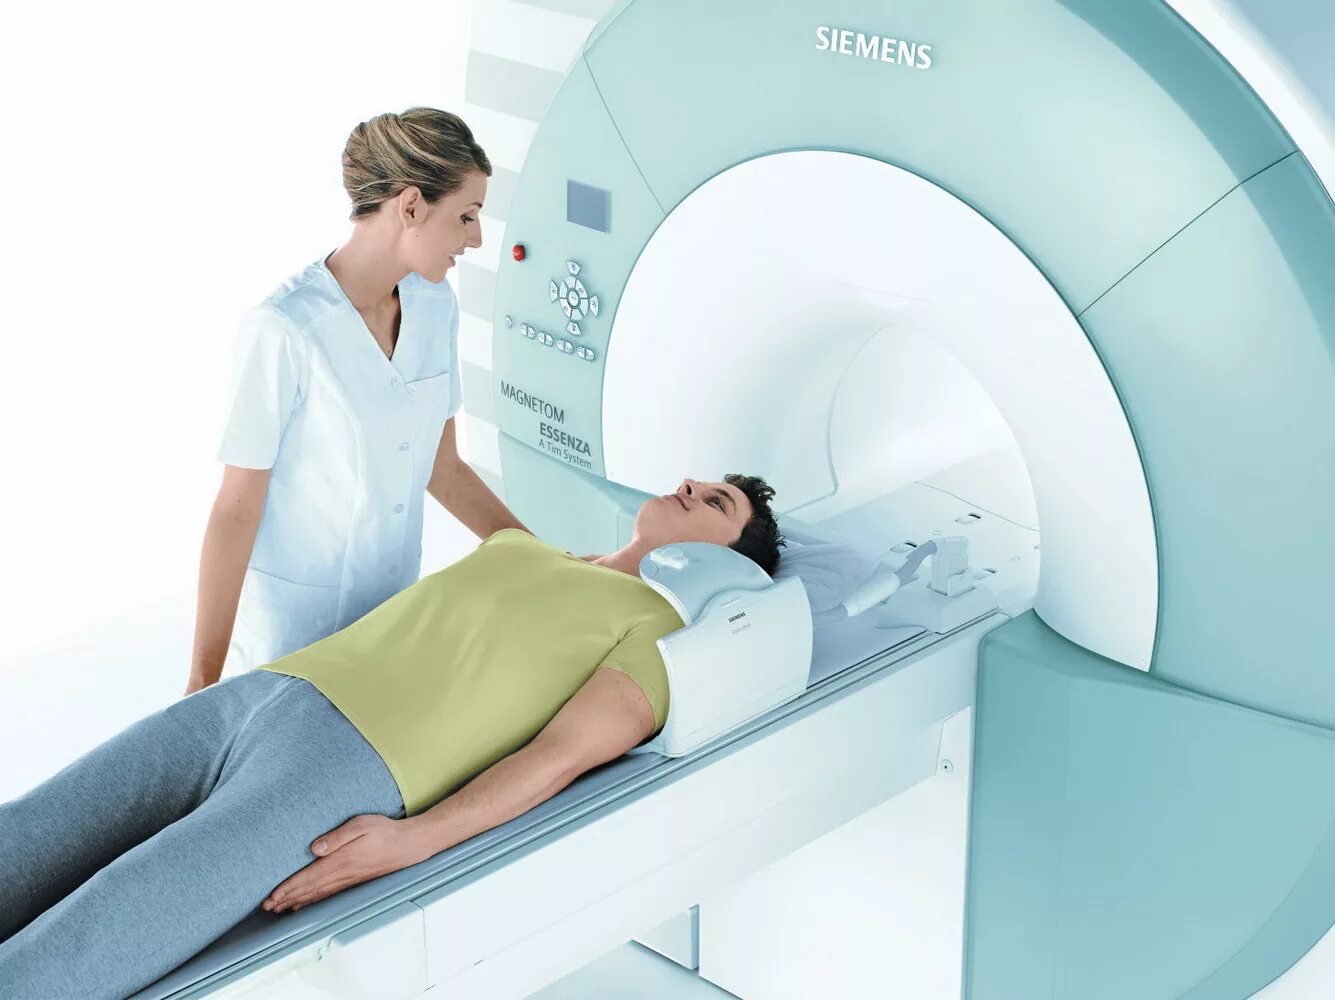 Мрт какая одежда. Siemens MAGNETOM Essenza 1.5. Мрт томограф. Магнито-резонансный томограф. Магнитно-резонансная томография (мрт).